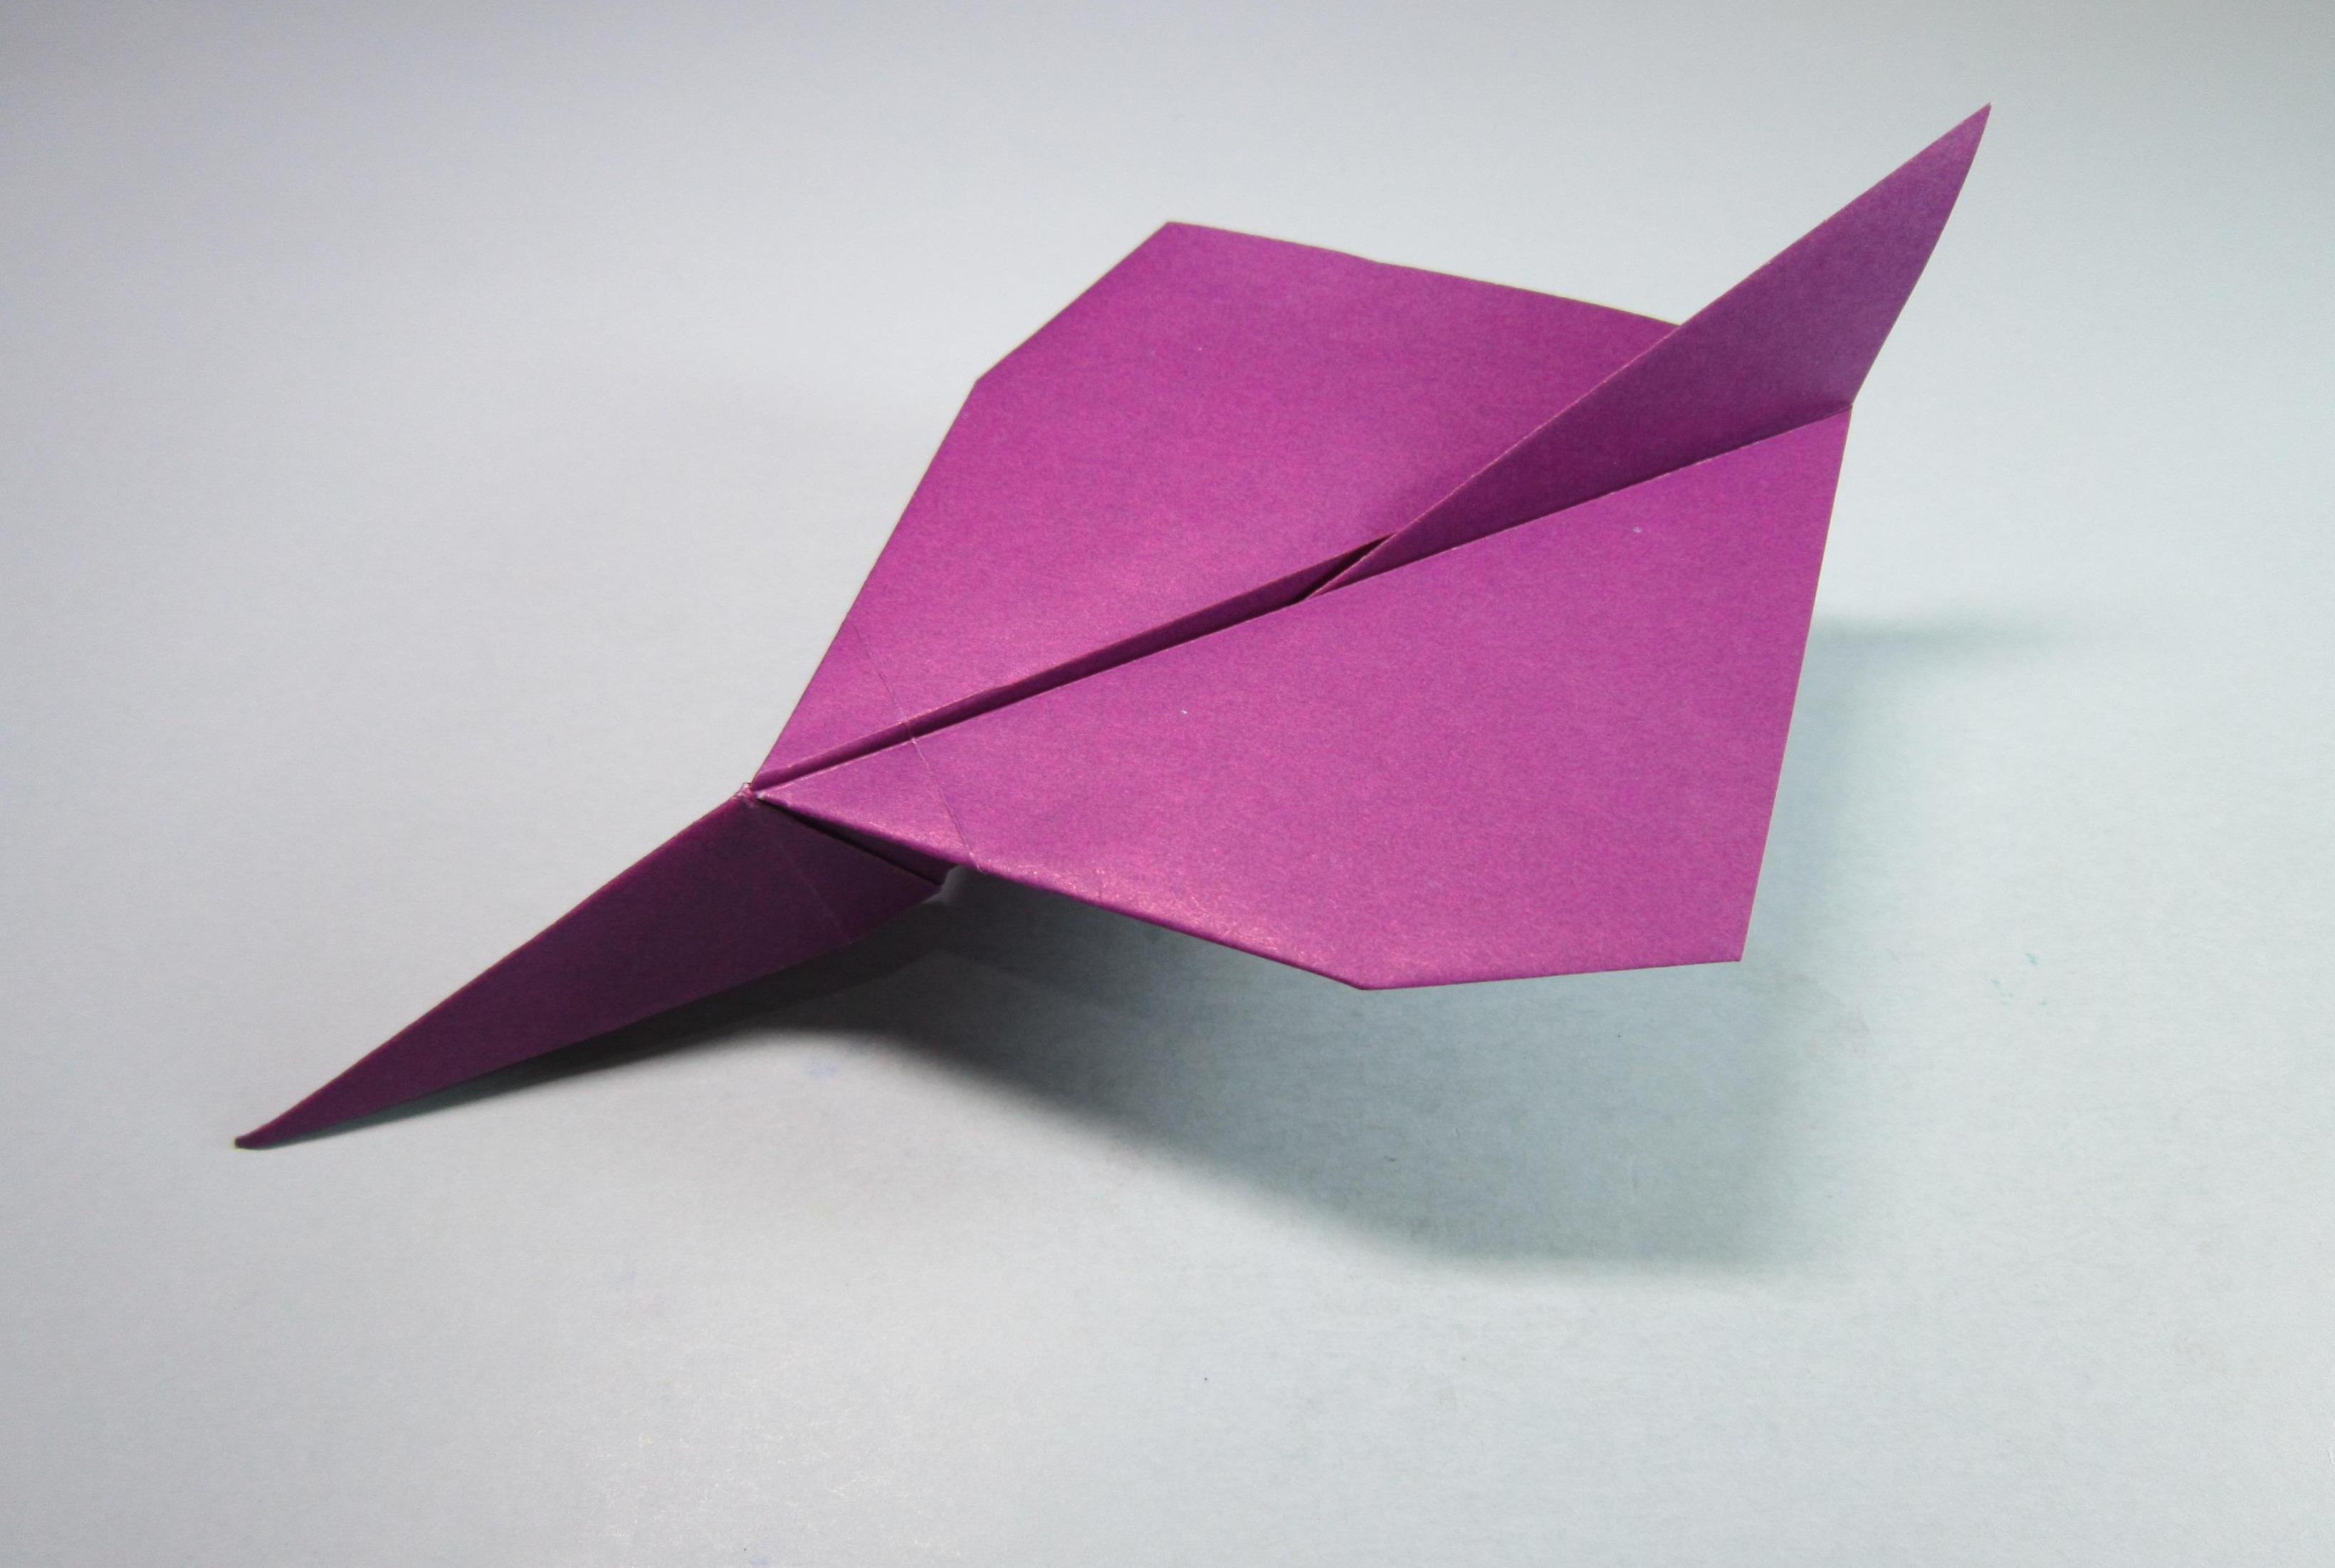 a四纸手工折纸飞机图片